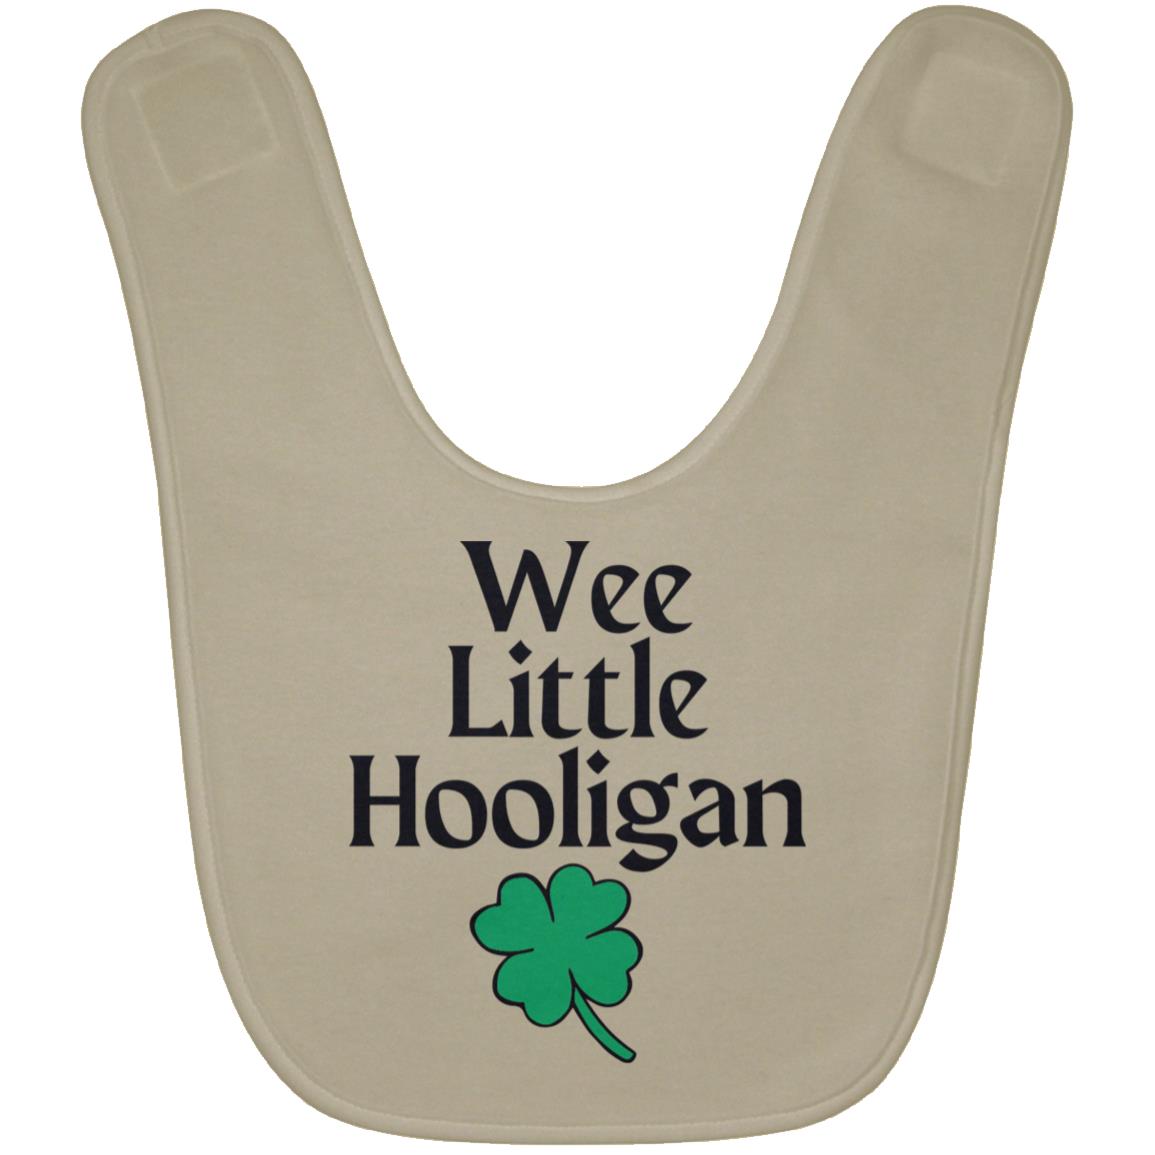 We Little Hooligan (St. Patrick's Day) - Baby Bib